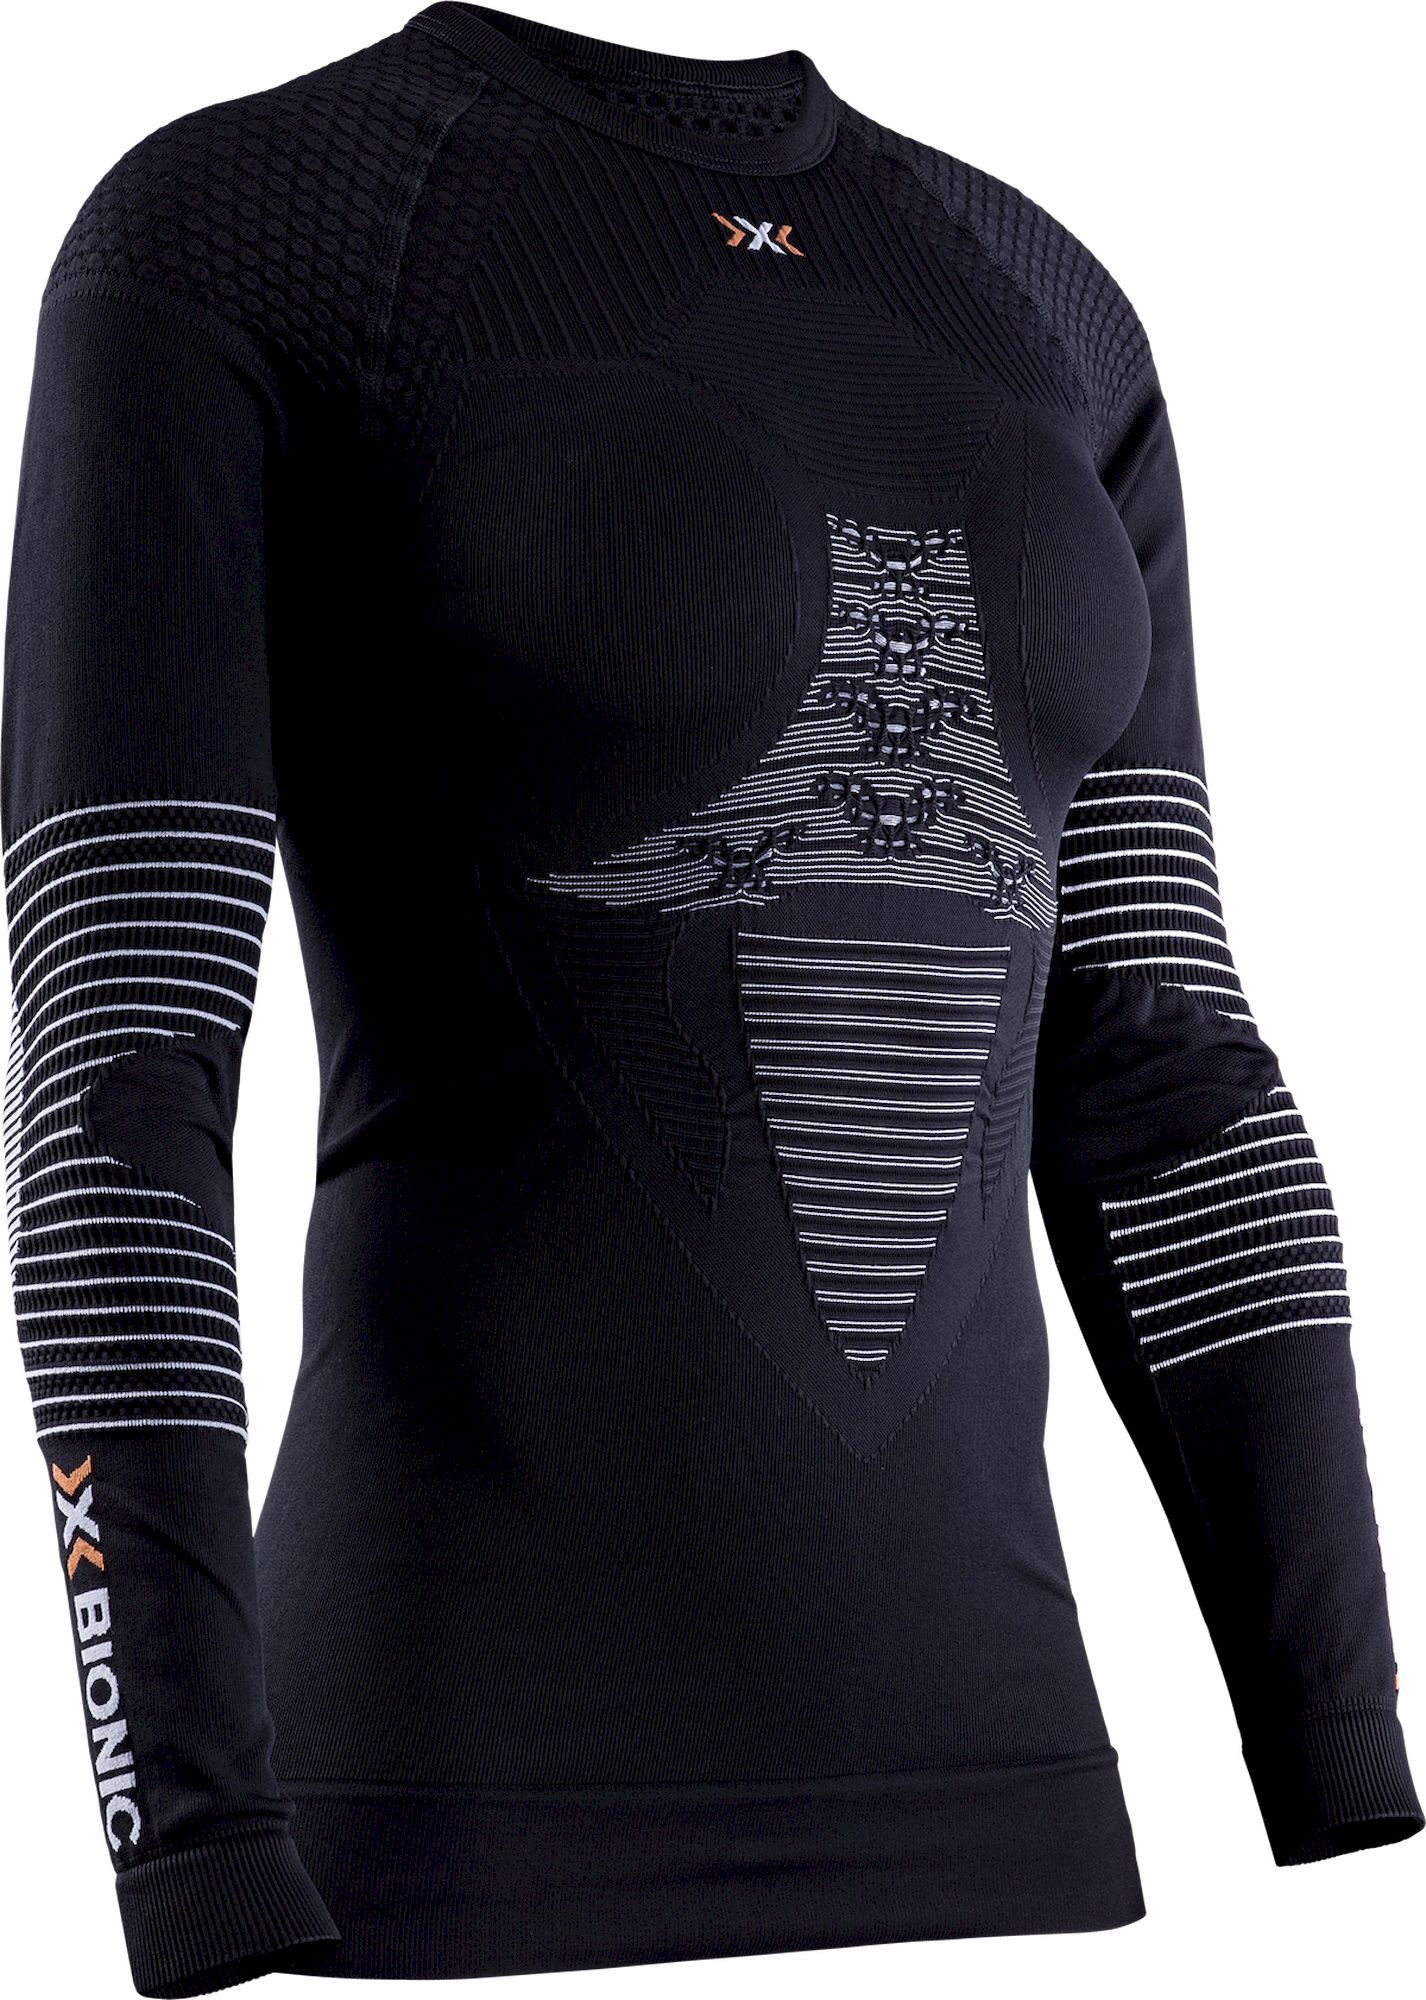 X-Bionic Energizer 4.0 Shirt Long Sleeve - Synthetisch ondergoed - Dames